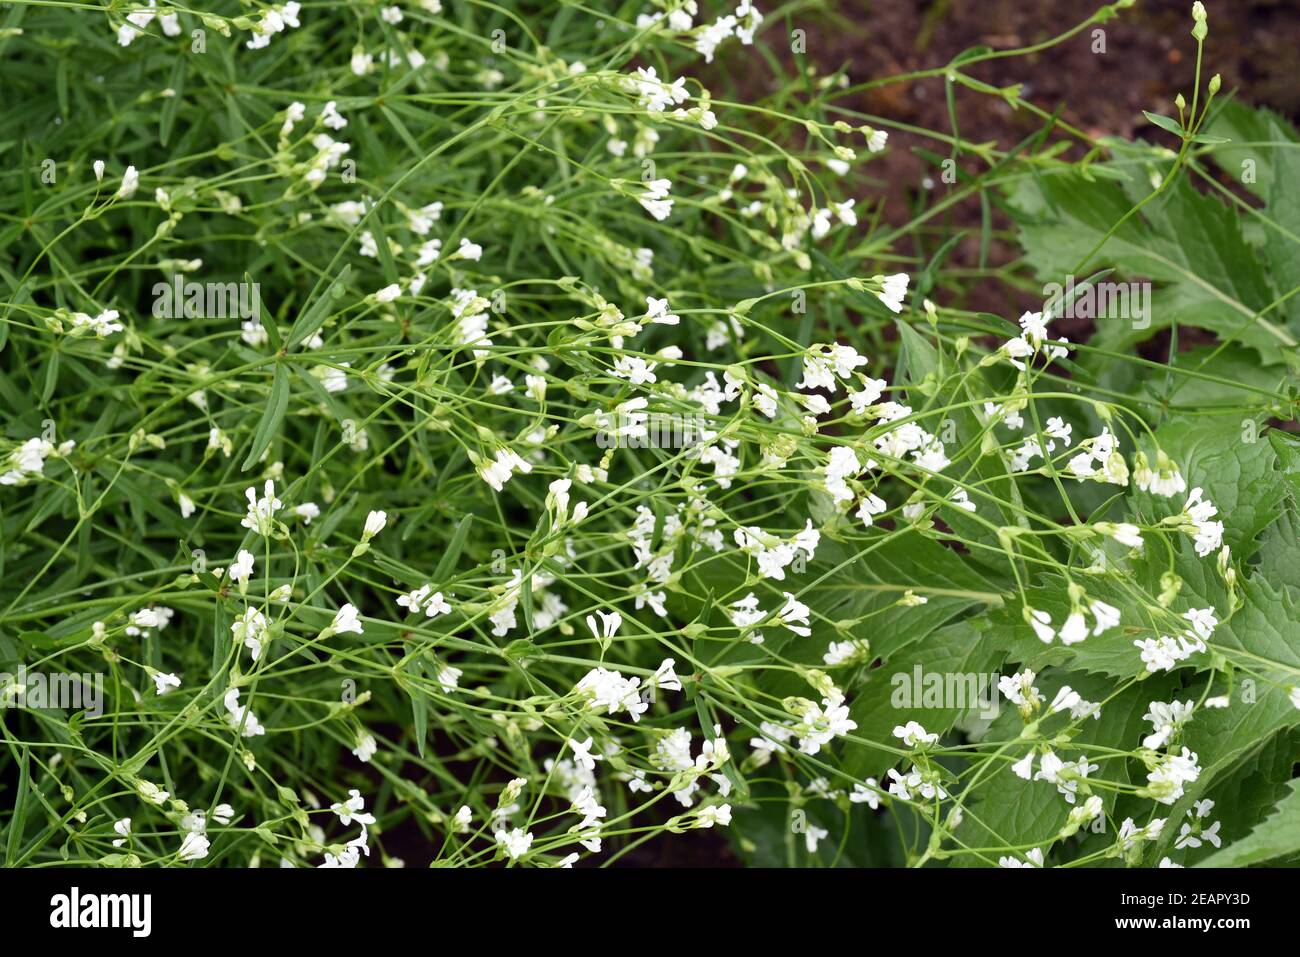 Faerbermeister, Asperula tinctoria, Foto de stock